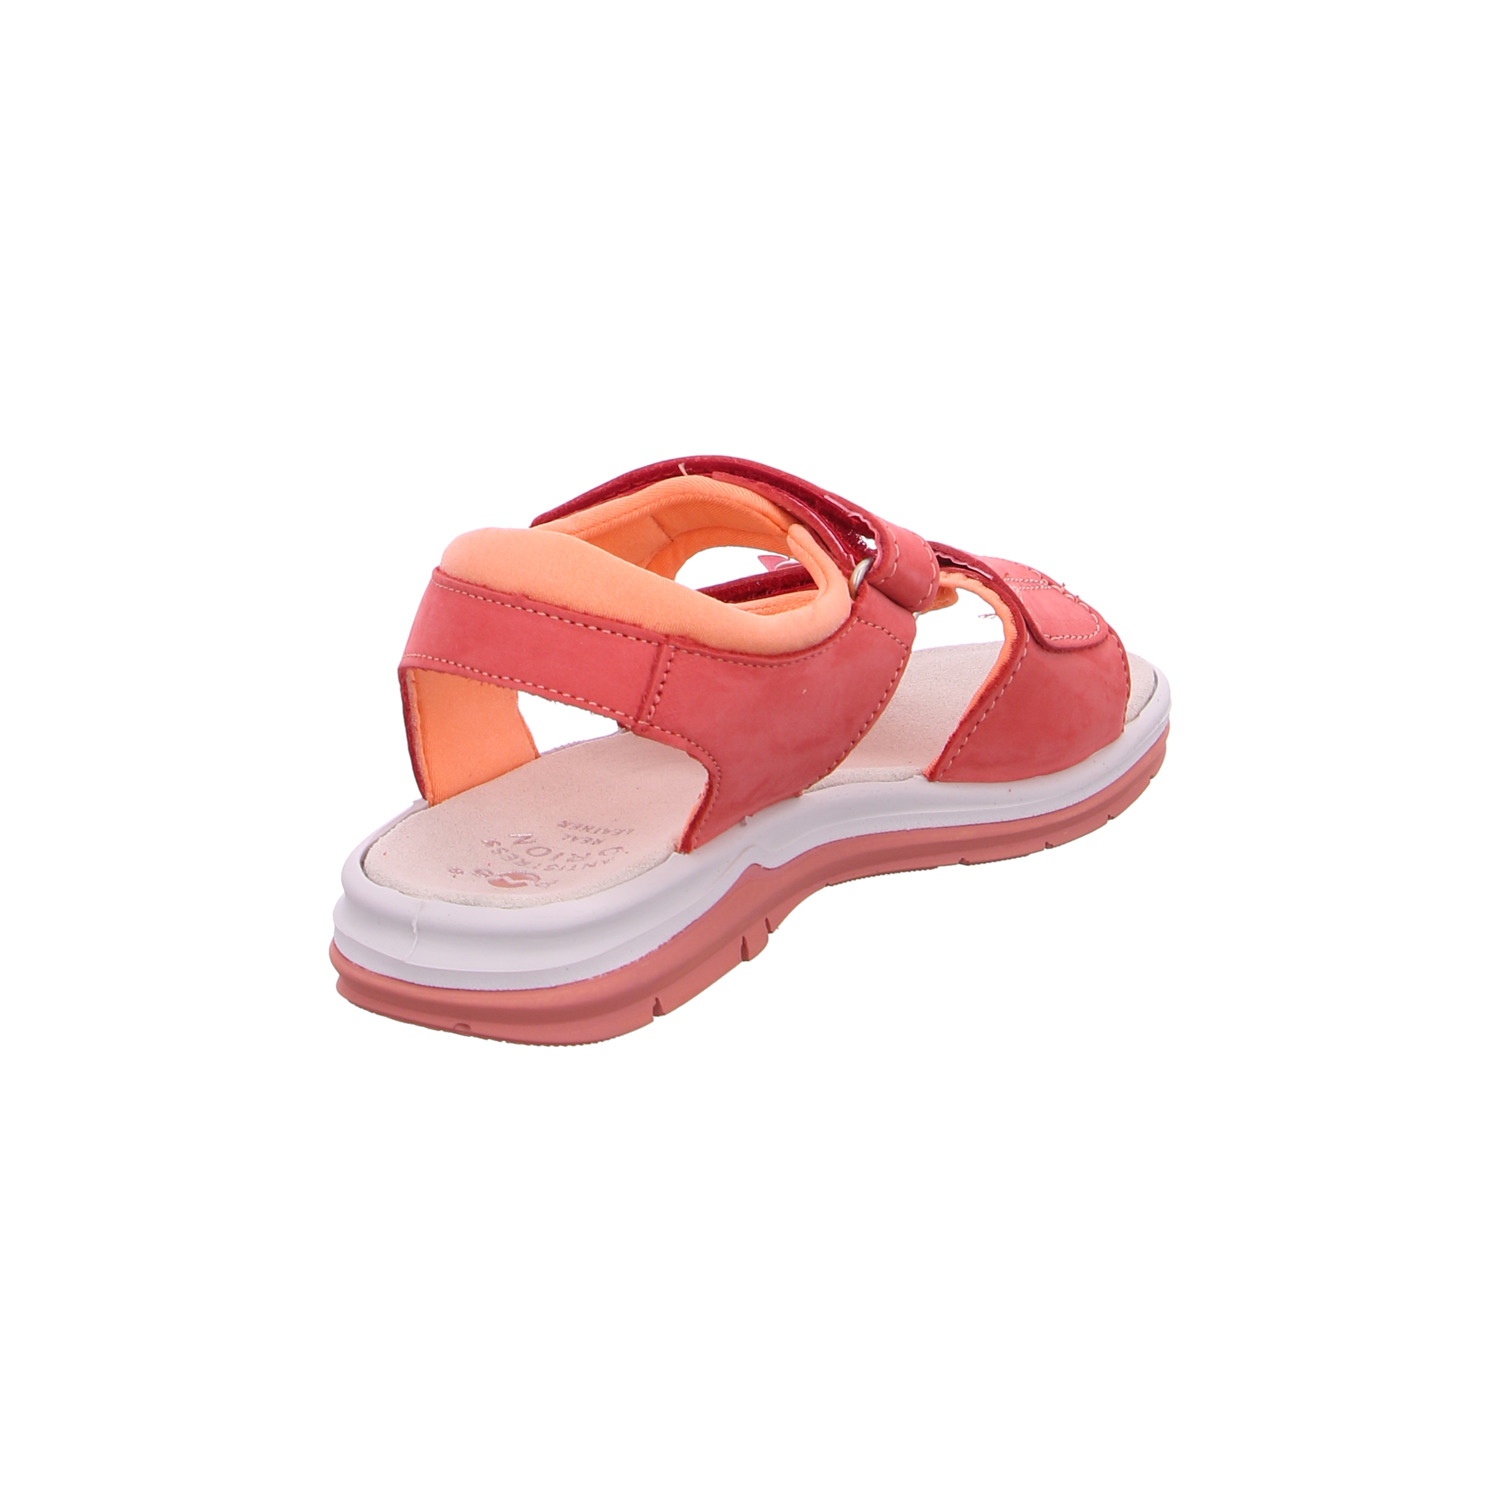 orion-kinder-sandaletten-mädchen-rosa-122542-28